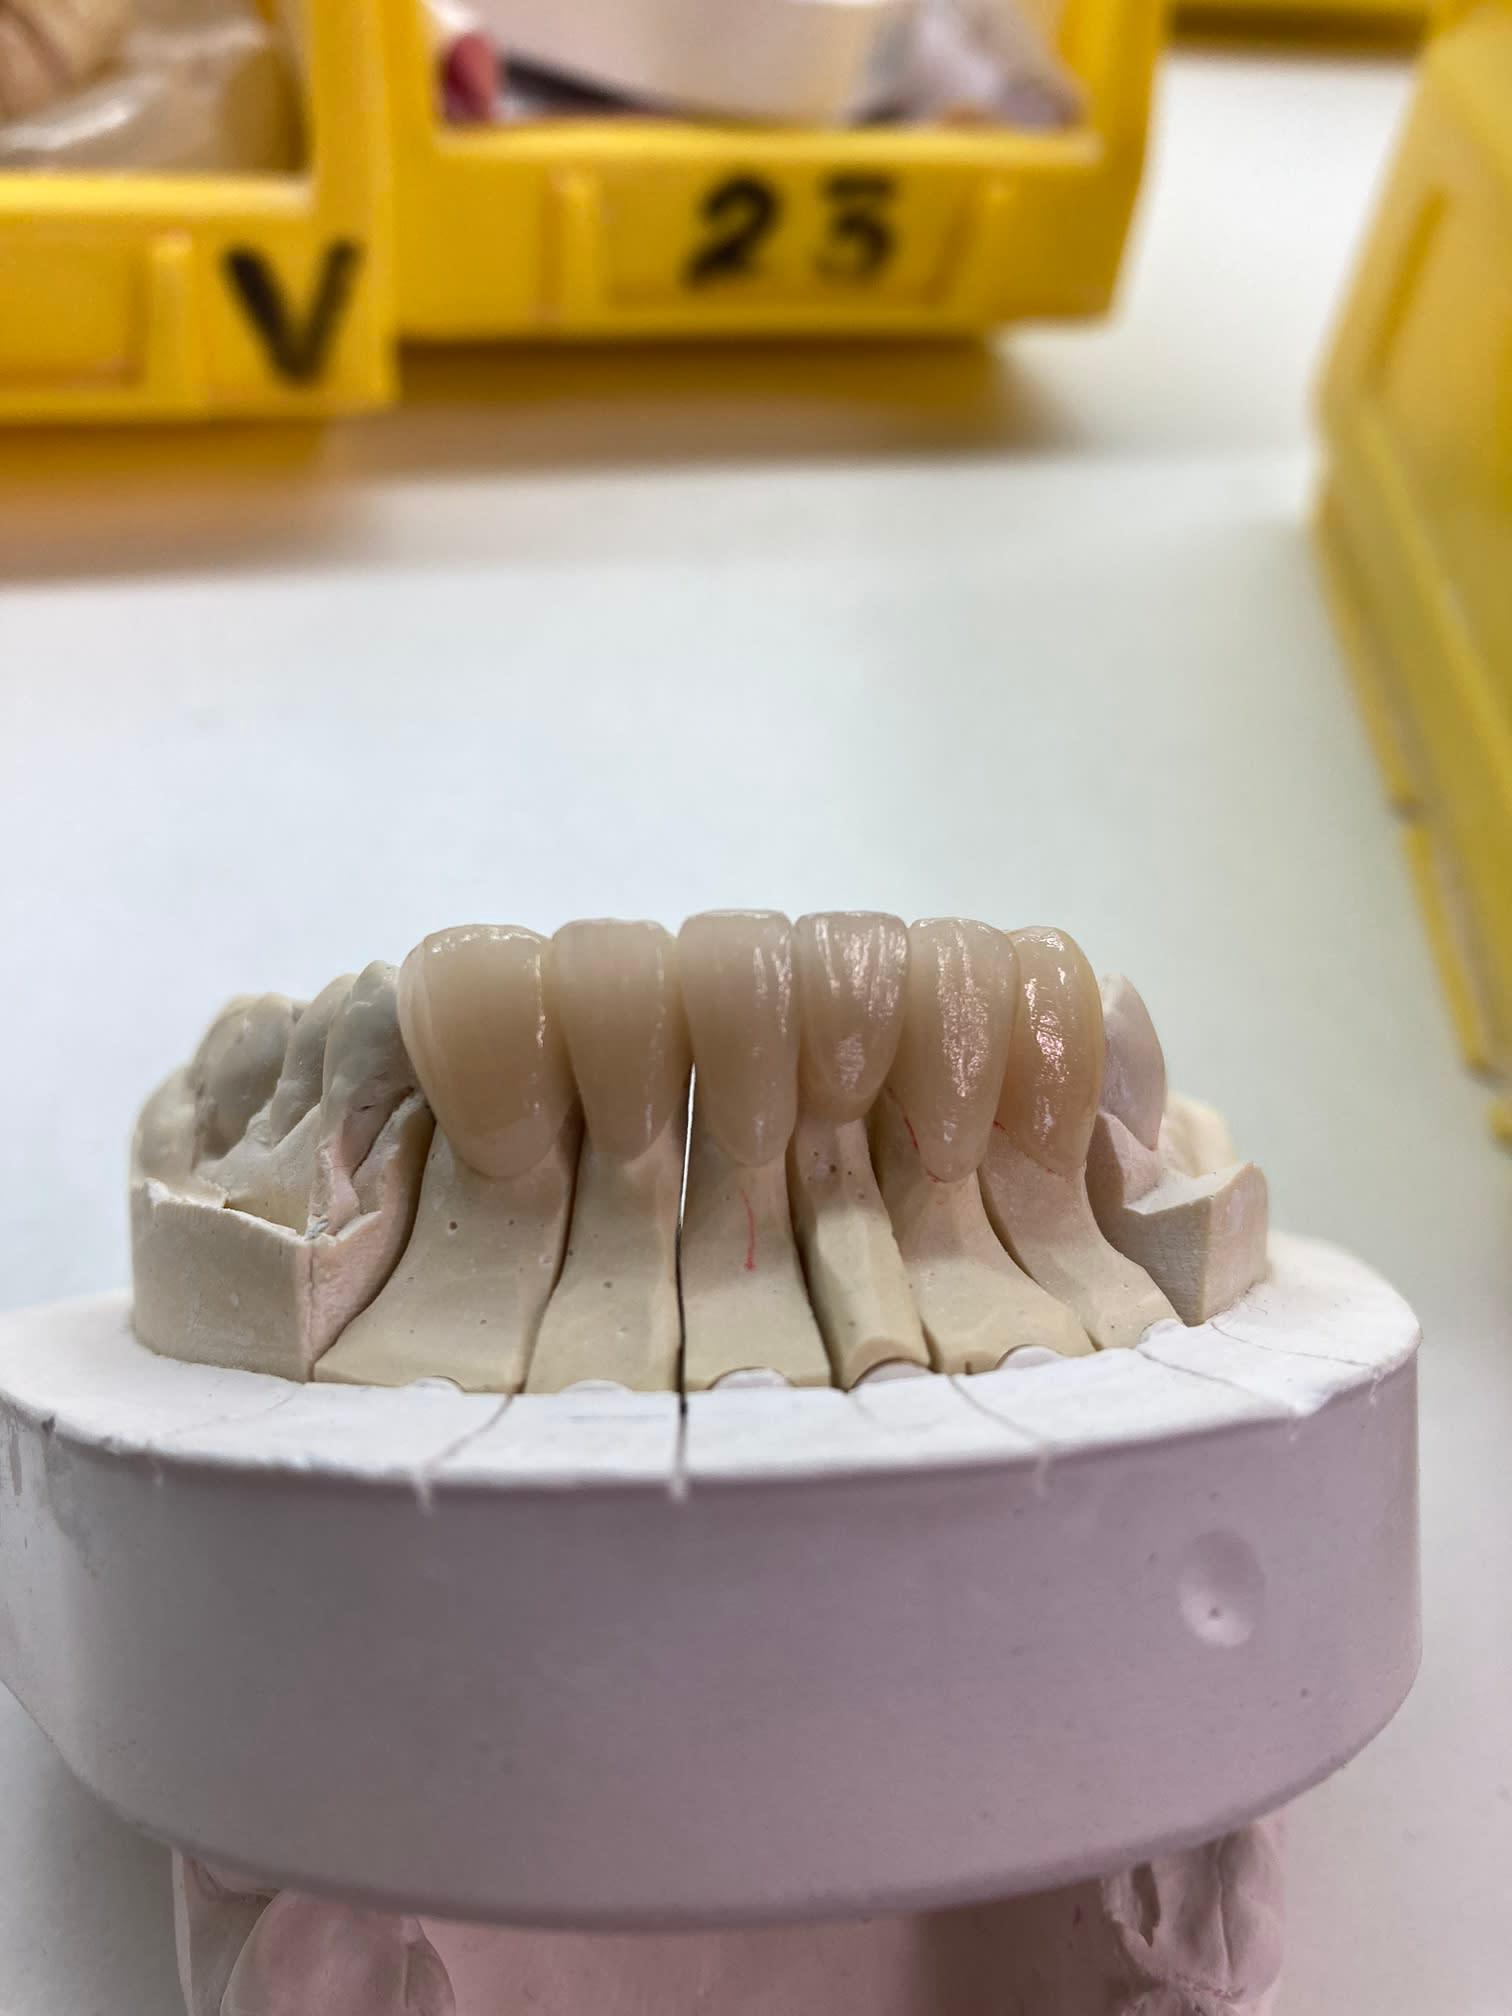 Images Steve Butler Dental Ceramics Ltd